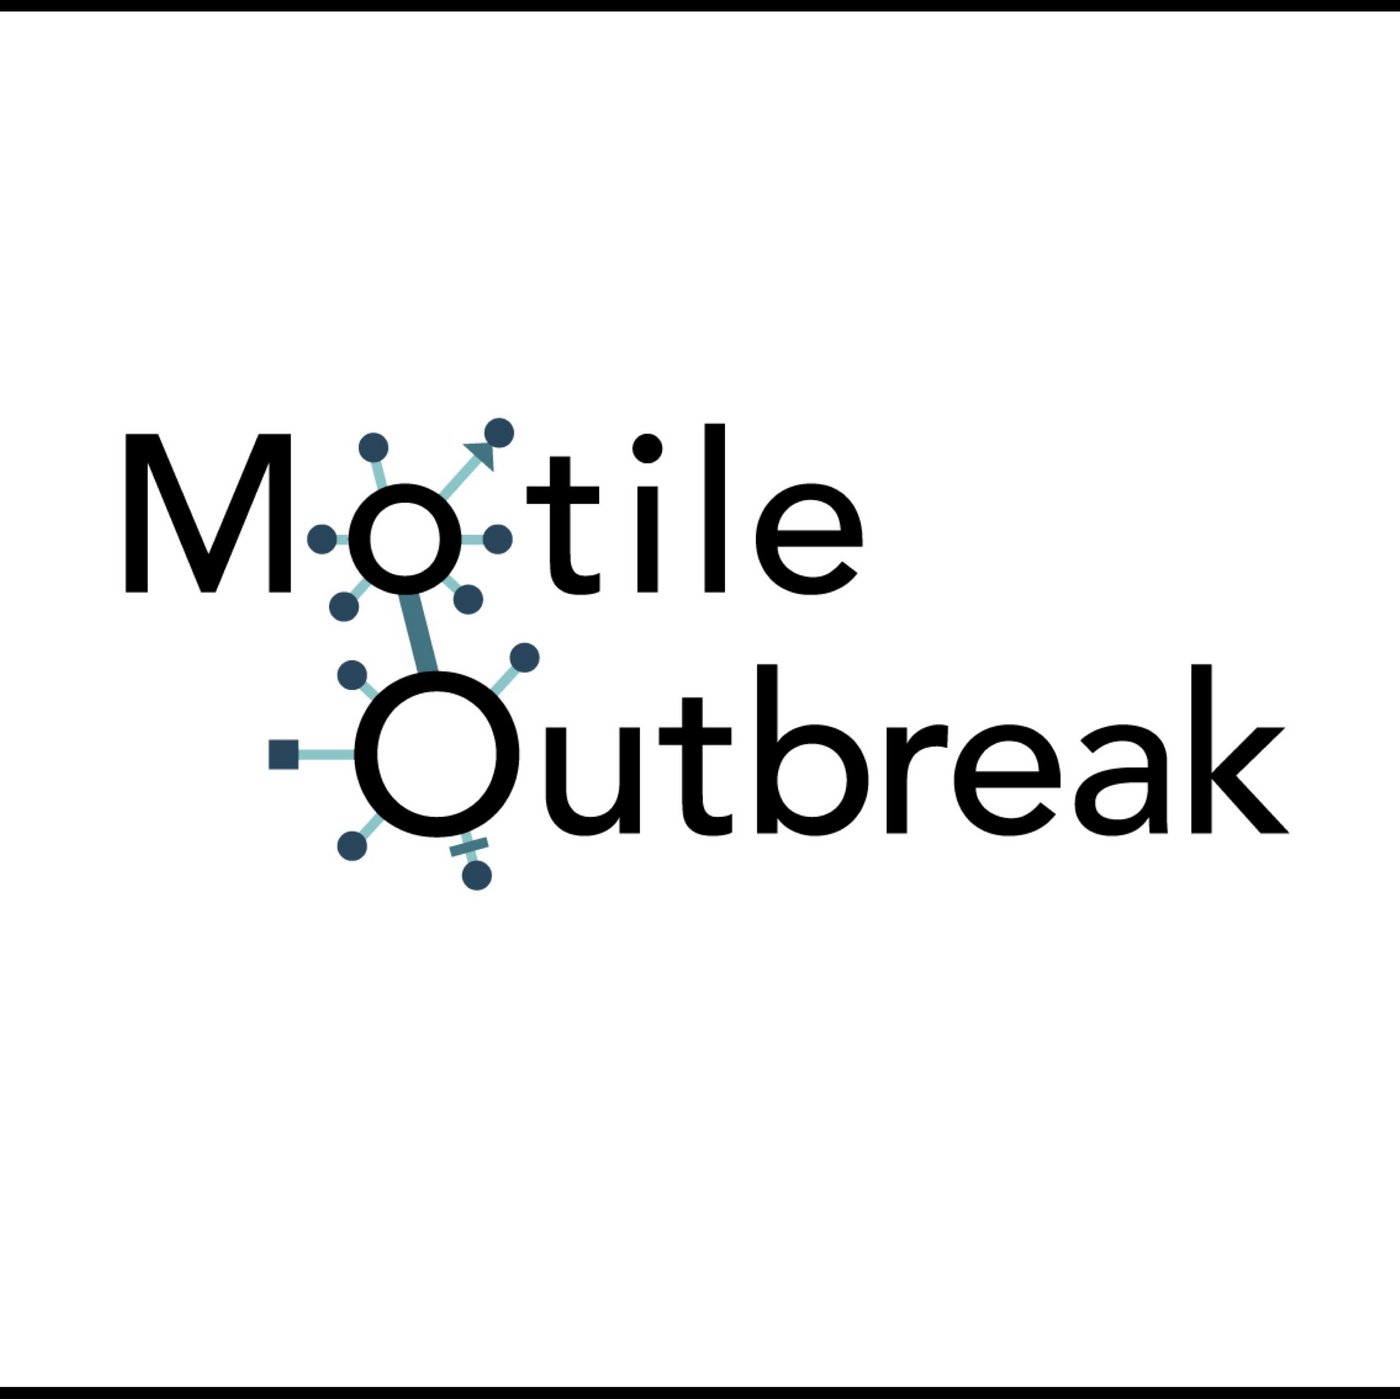 Logo motile outbreak: black letters on white backround. The o in both words loks like a virus.l